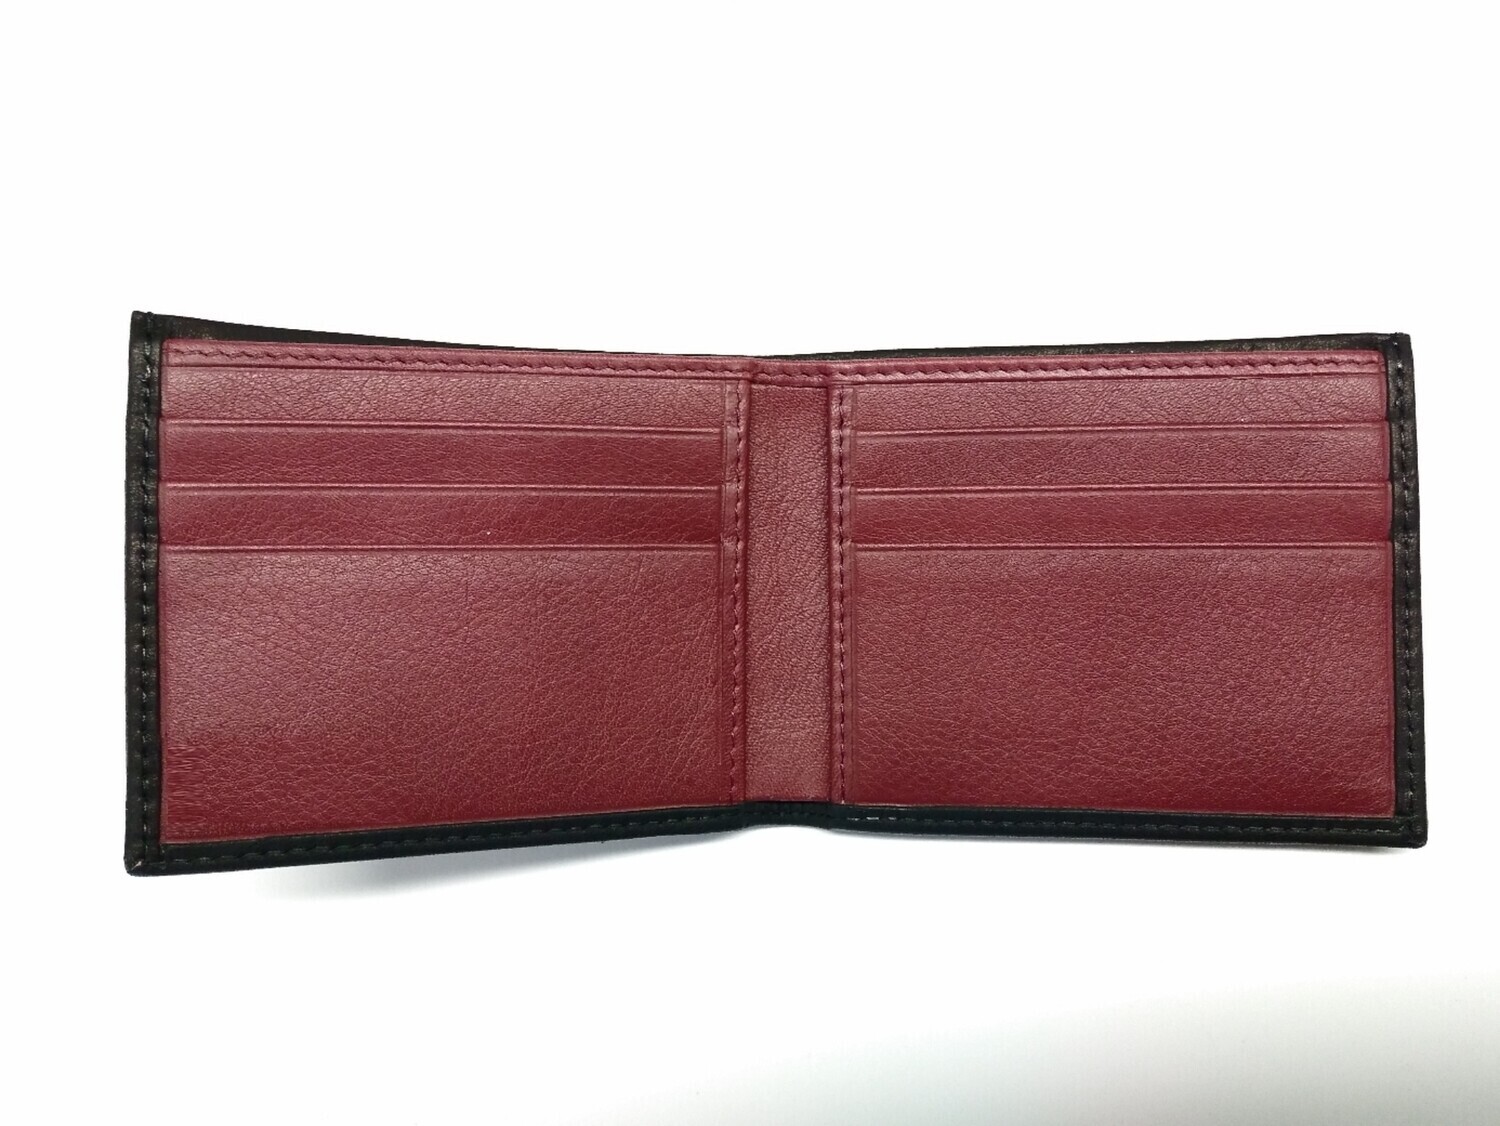 Soft leather wallet bicolor mood